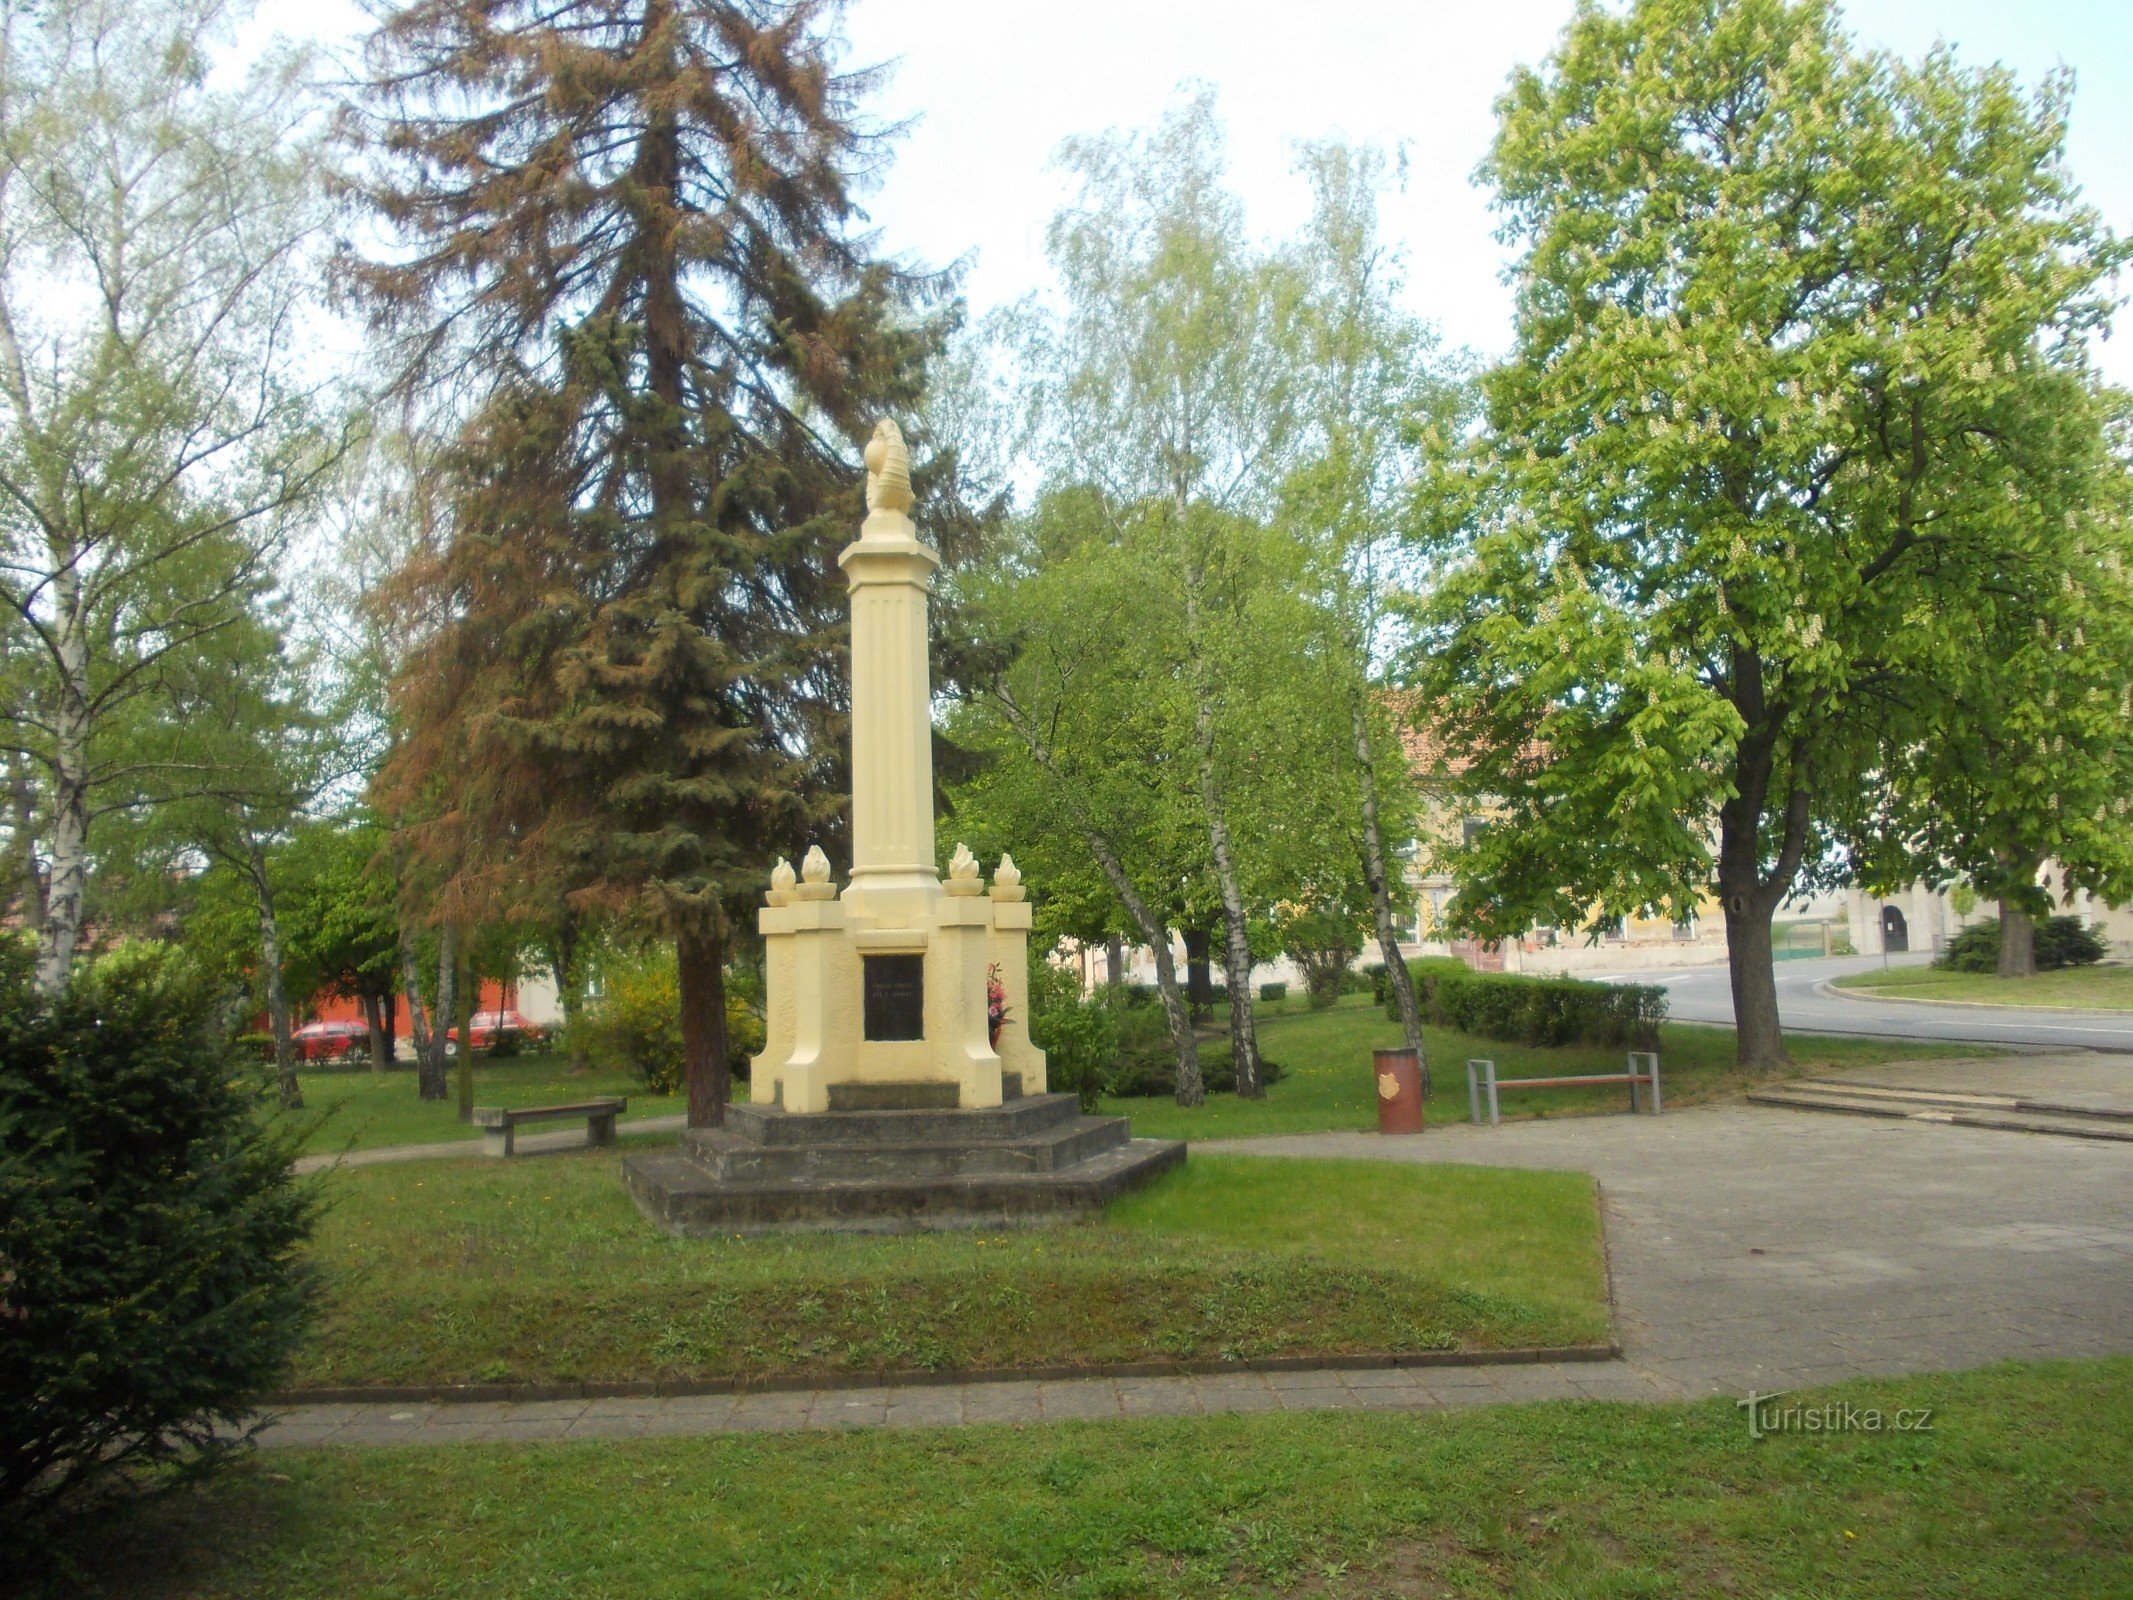 spomenik u parku